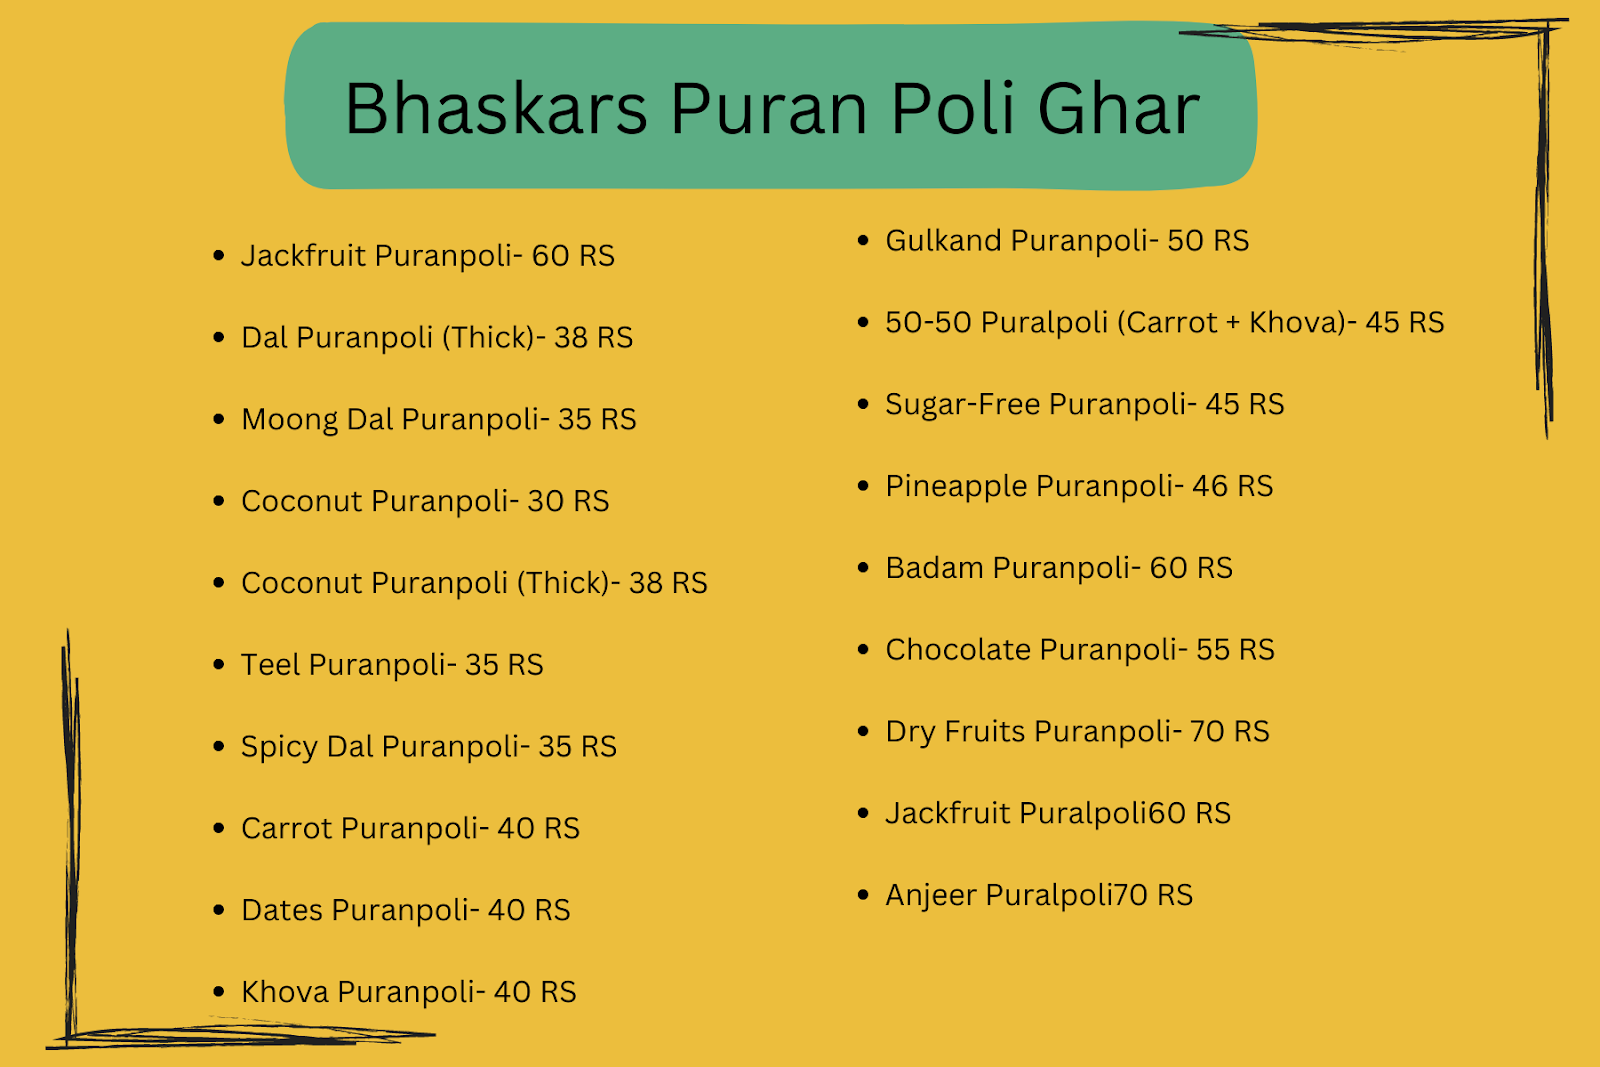 Puran Poli Ghar menu